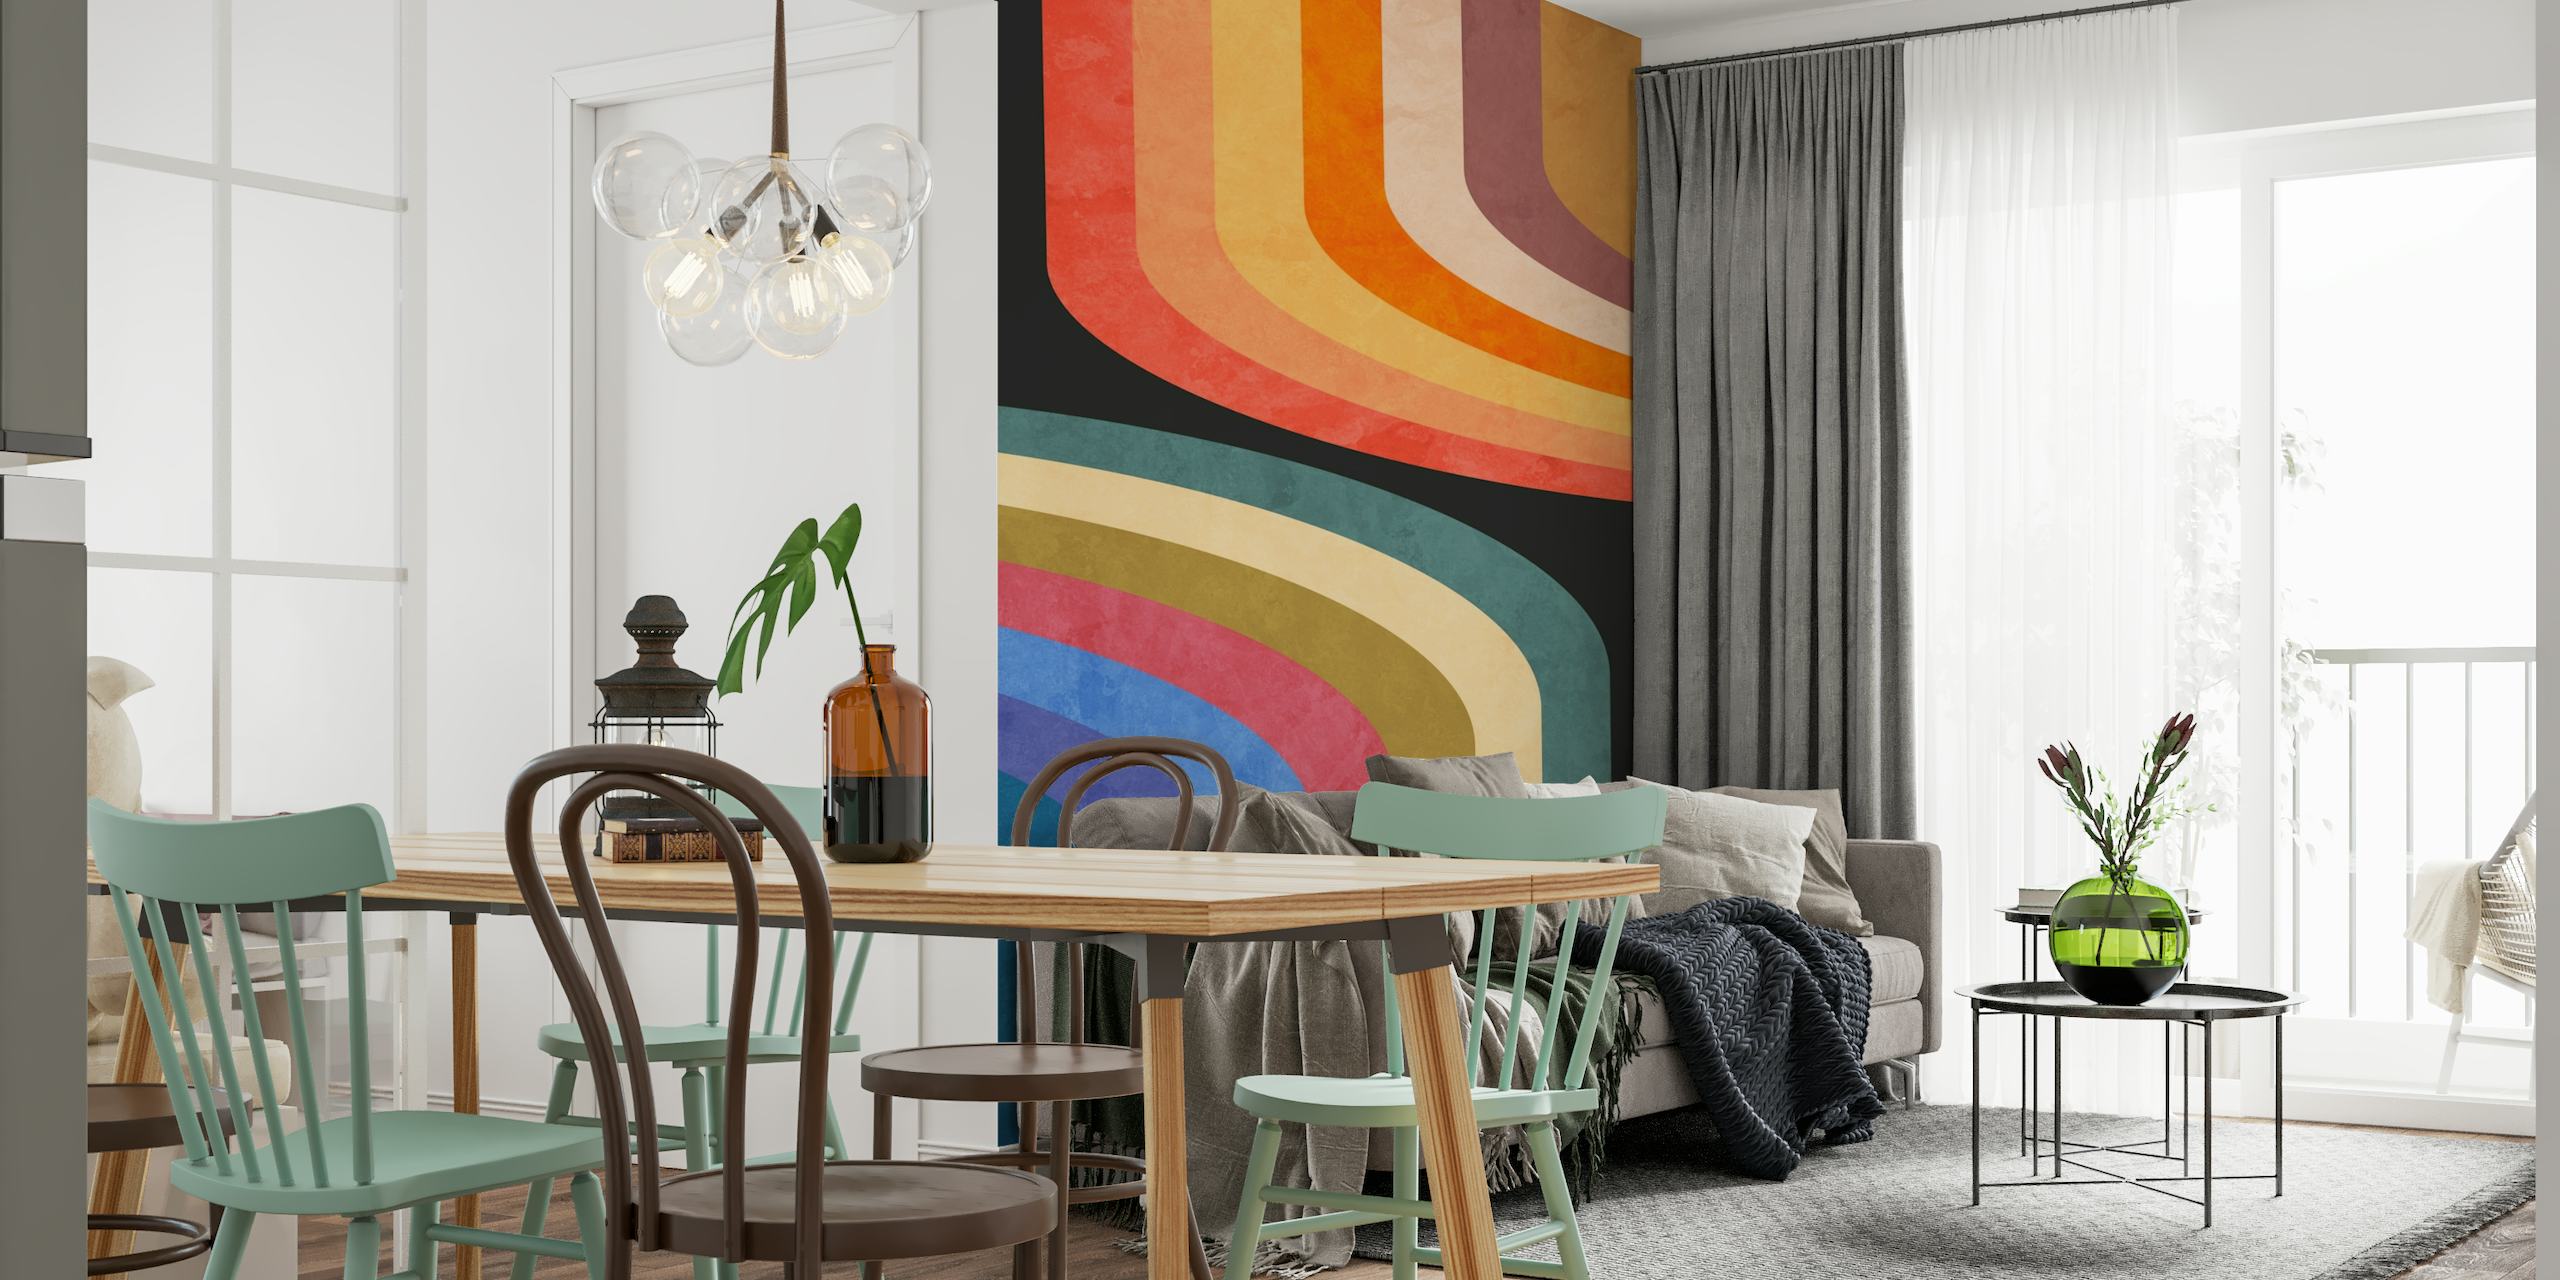 Mural de parede abstrato com arcos coloridos e design inspirado no arco-íris